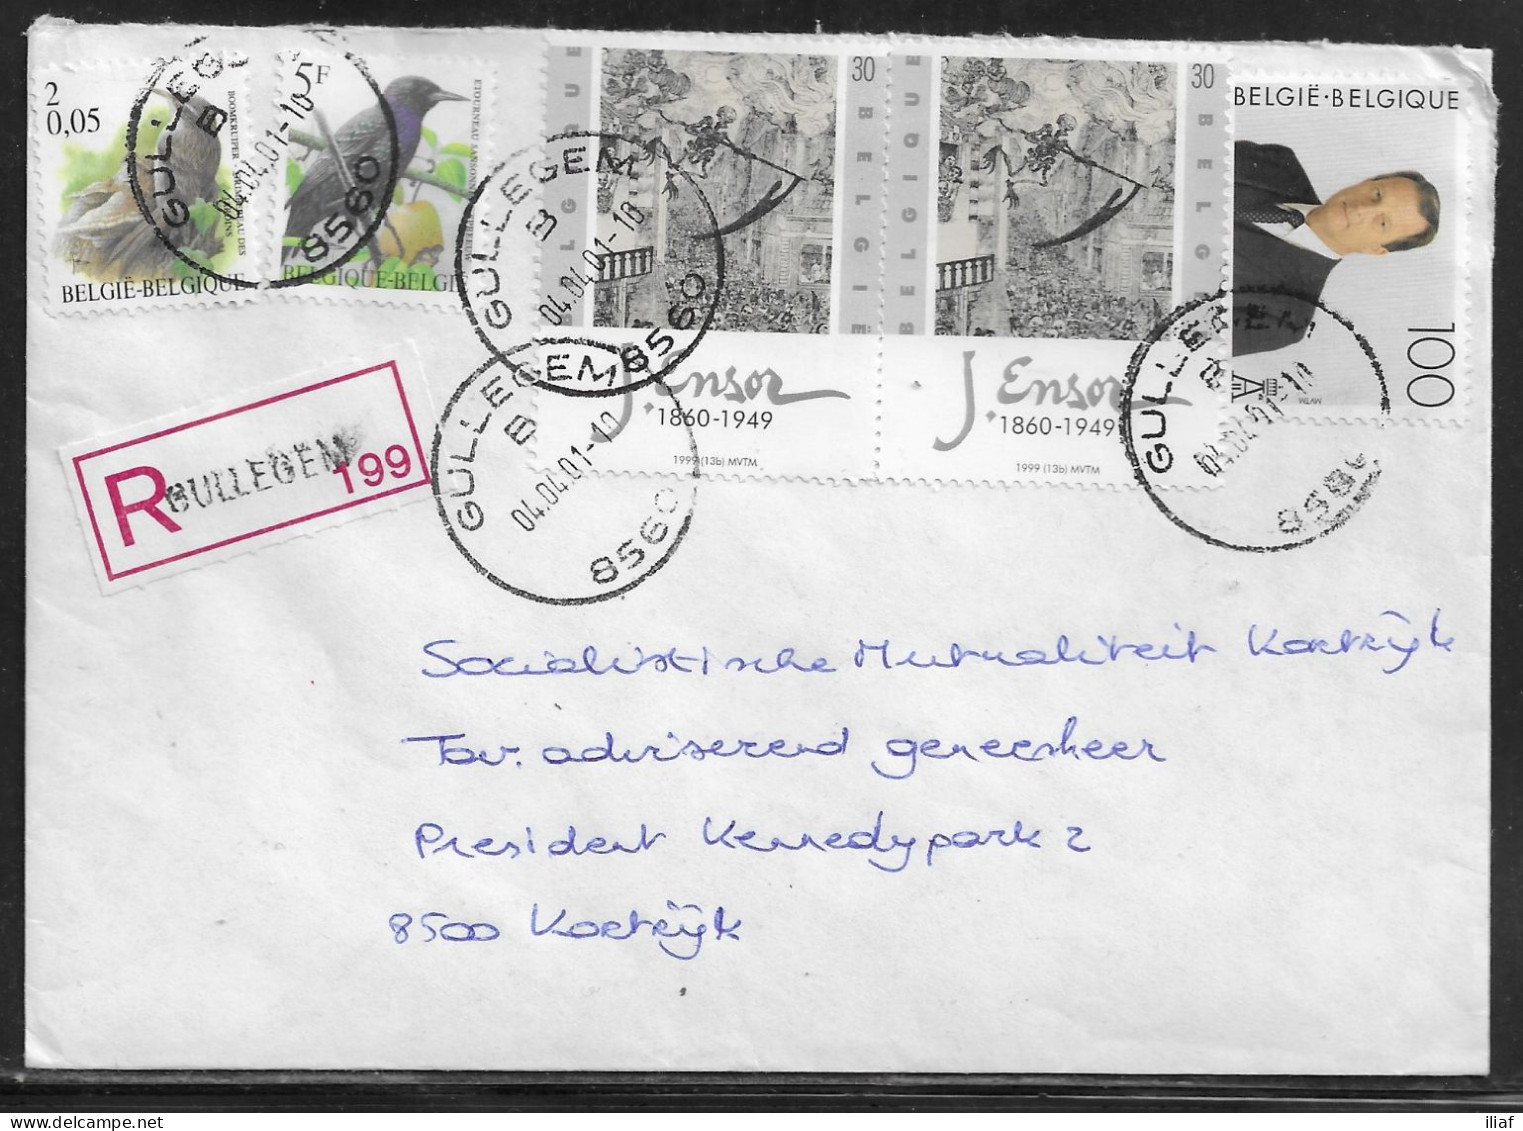 Belgium. Stamps Mi. 2970, Mi. 2690, Mi. 2882, Mi. 2628 on Registered Letter Sent From Gullegem 04.04.2001 for Kortrijk - Storia Postale